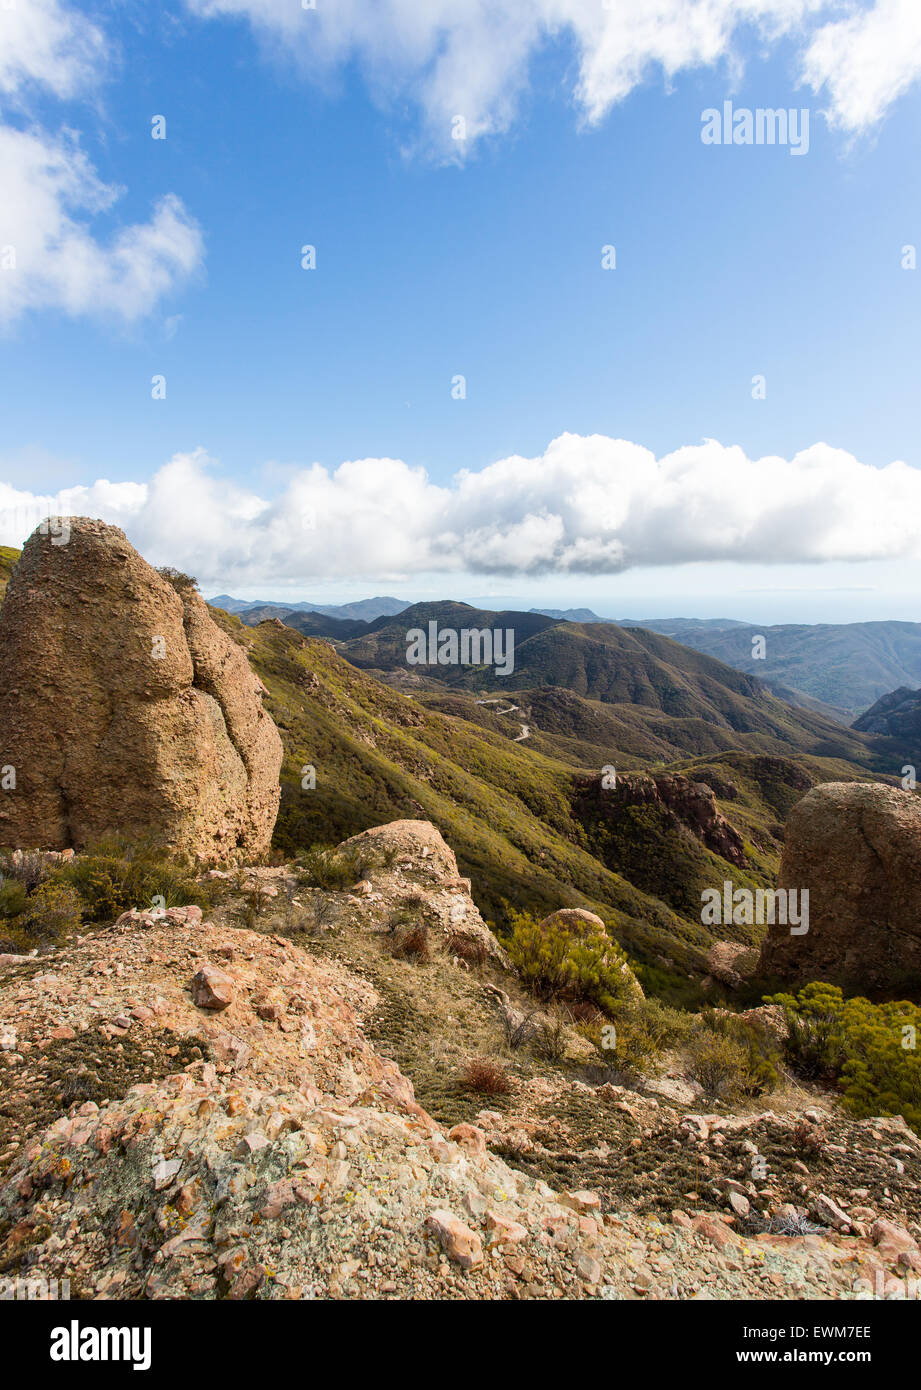 A view through the Santa Monica Mountains National Recreation Area. Stock Photo